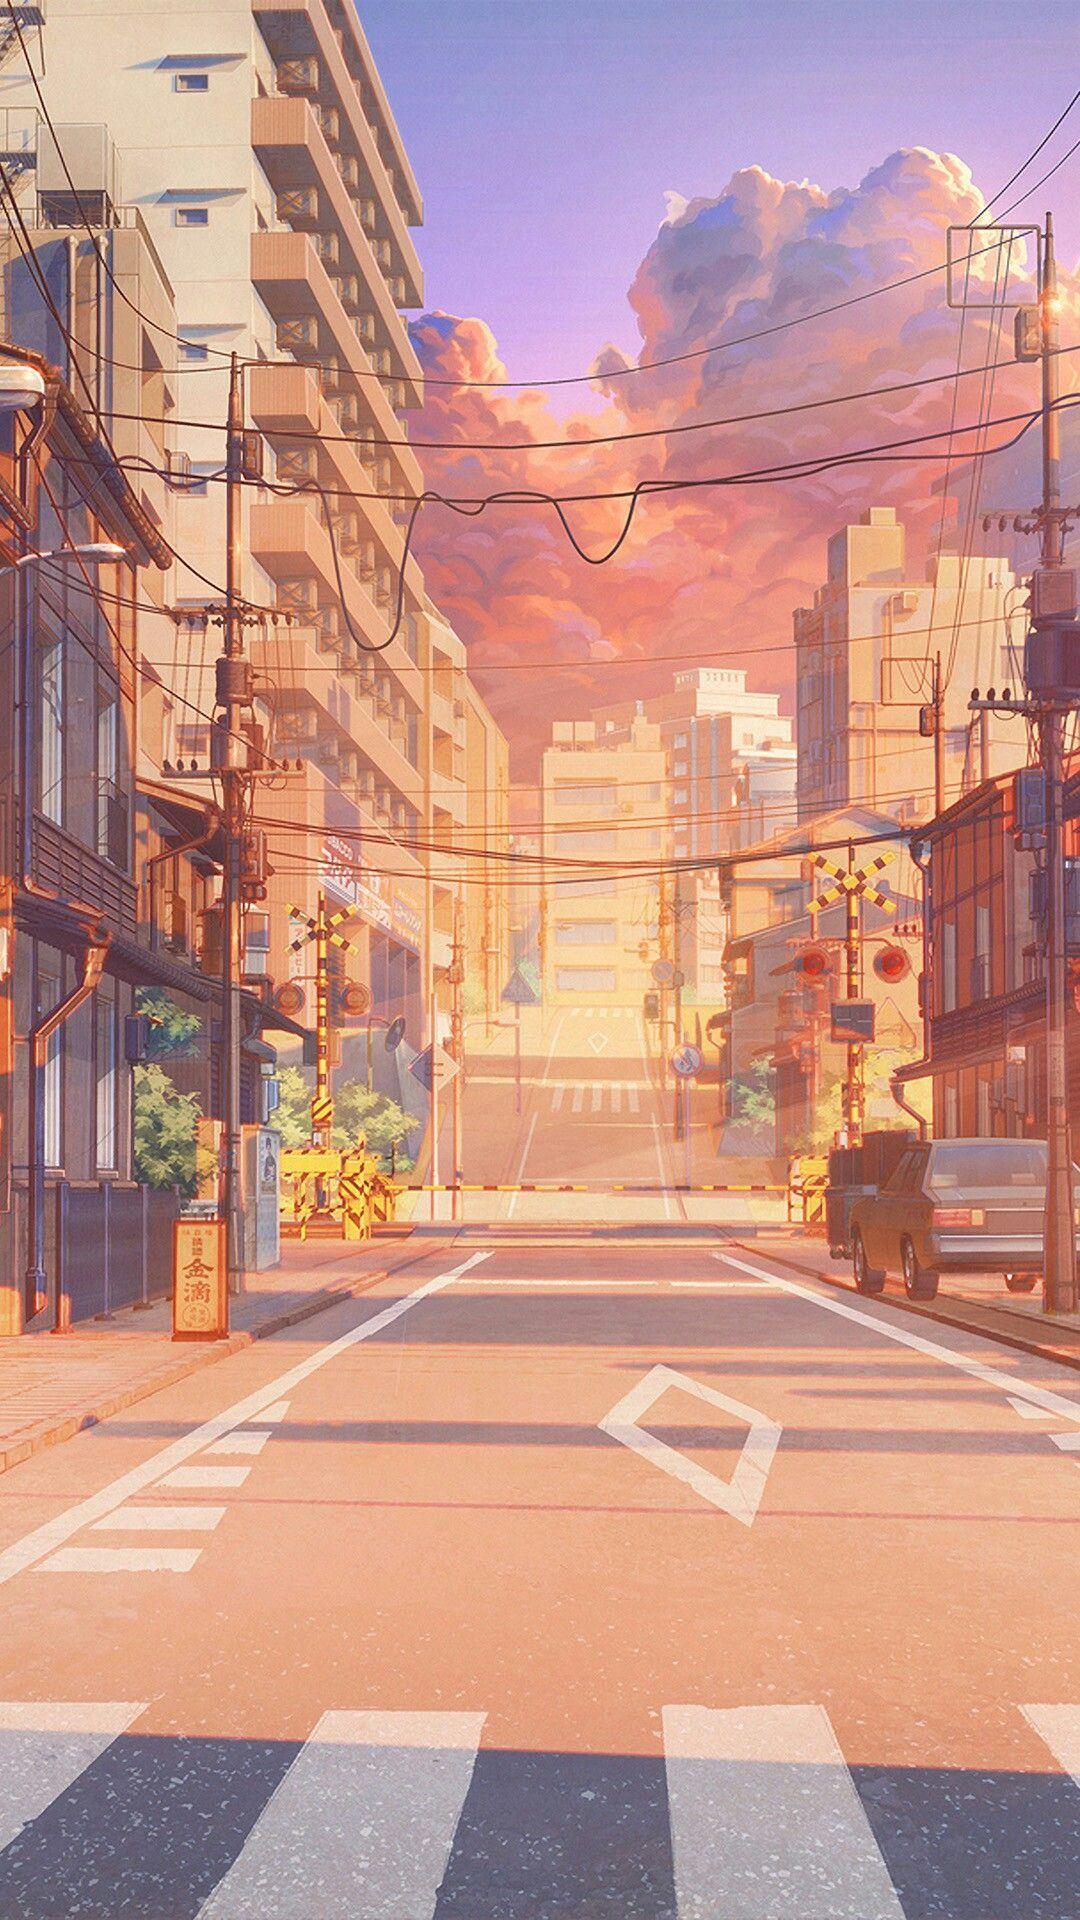 Anime sunset street illustration wallpaper. My Canvas in 2019